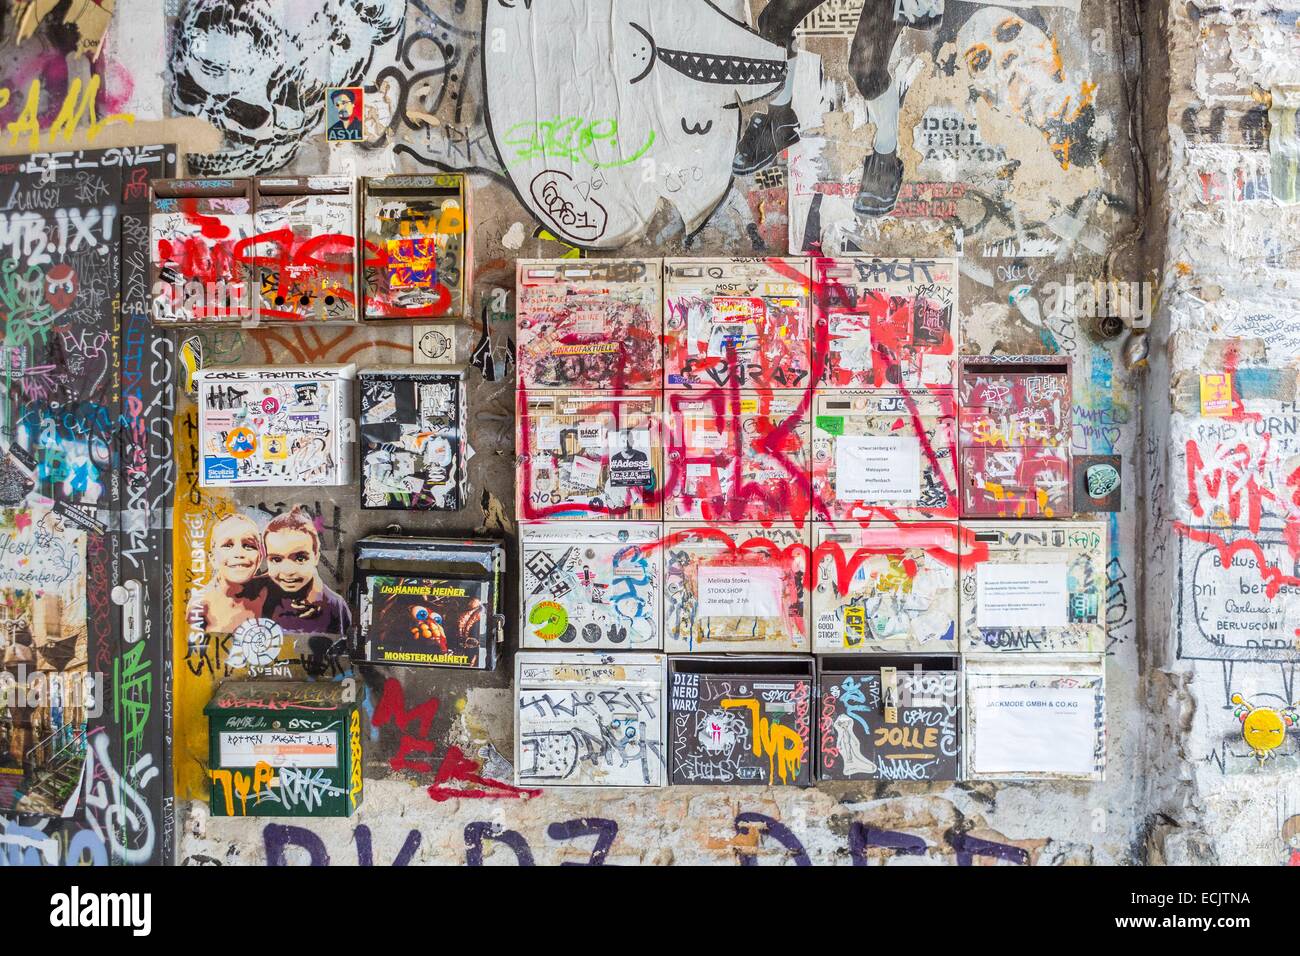 Germany, Berlin, East Berlin, Scheunenviertel district, Haus Schwarzenberg club culture, Hackescher Market, tag and graffiitis Stock Photo